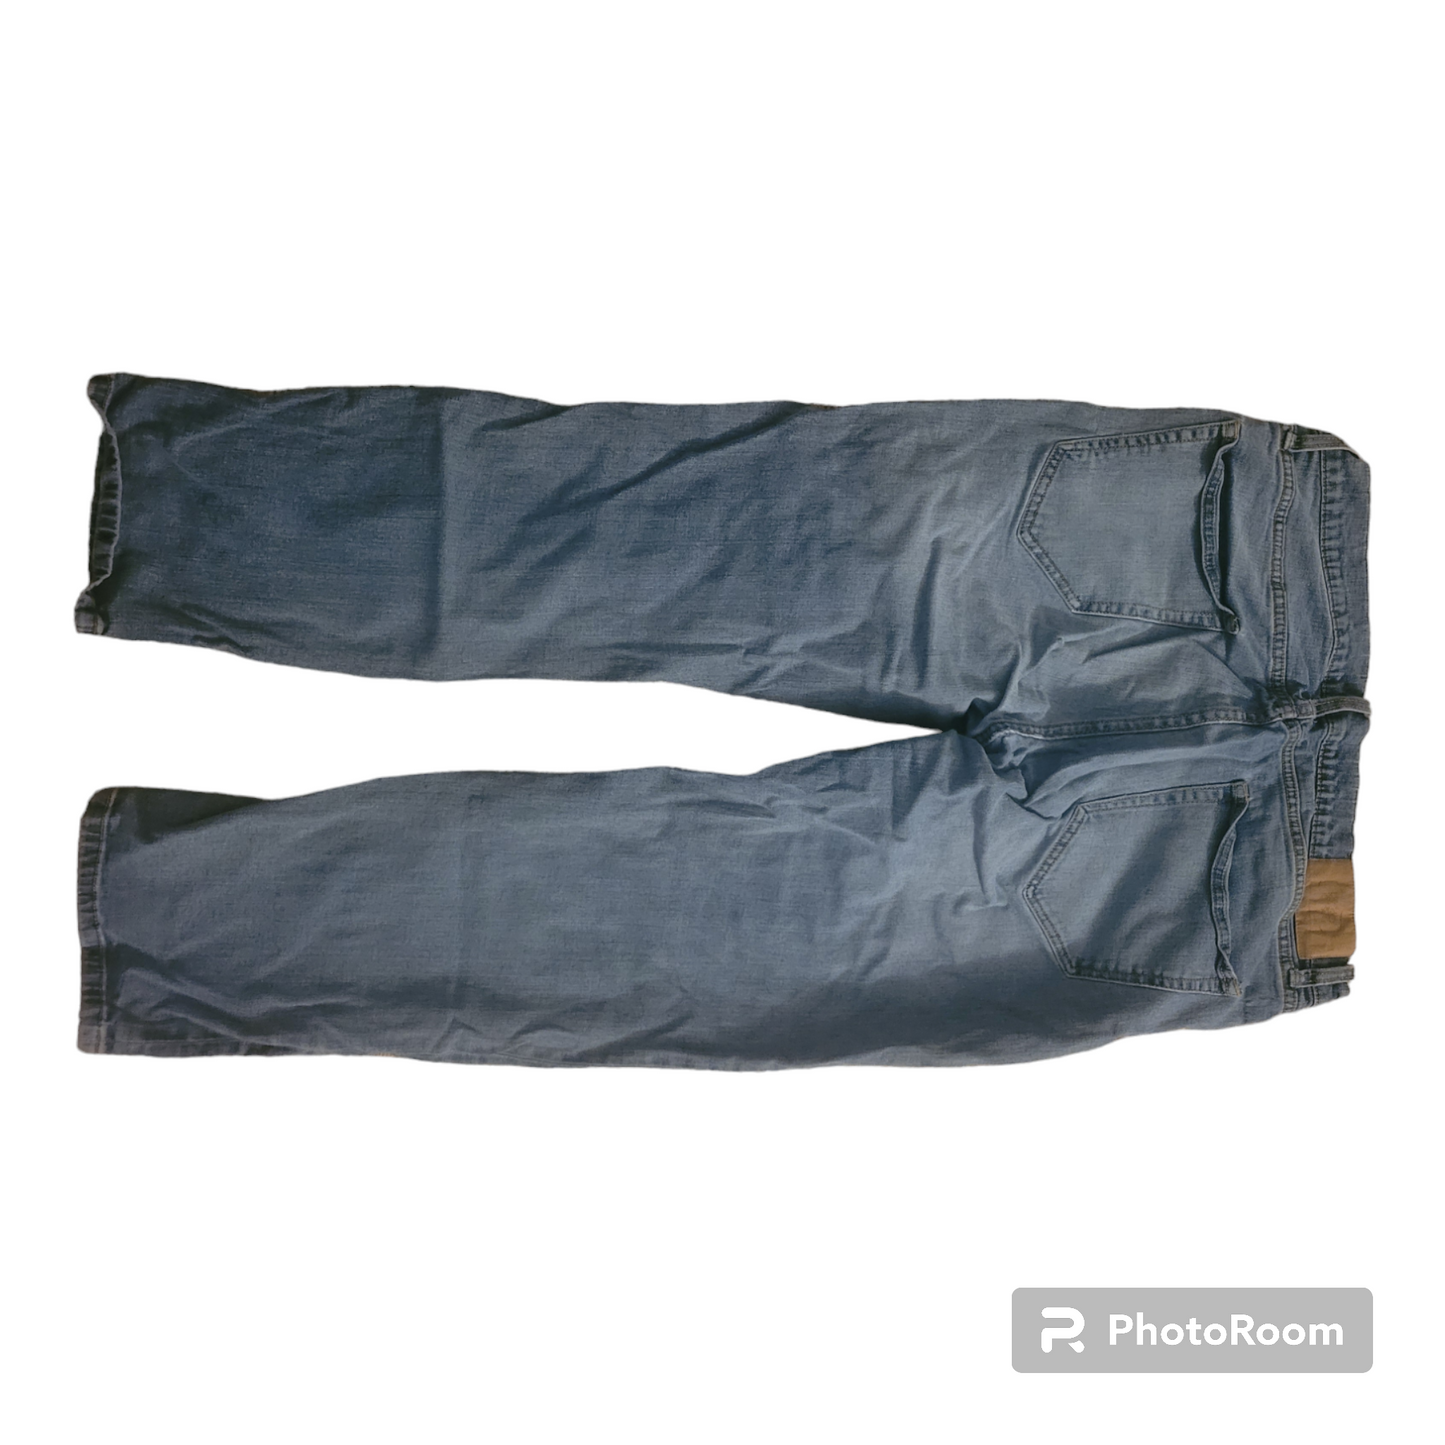 Mens Jeans, Berkley Jensen Brand, Blue Jeans, size 36W x 29L